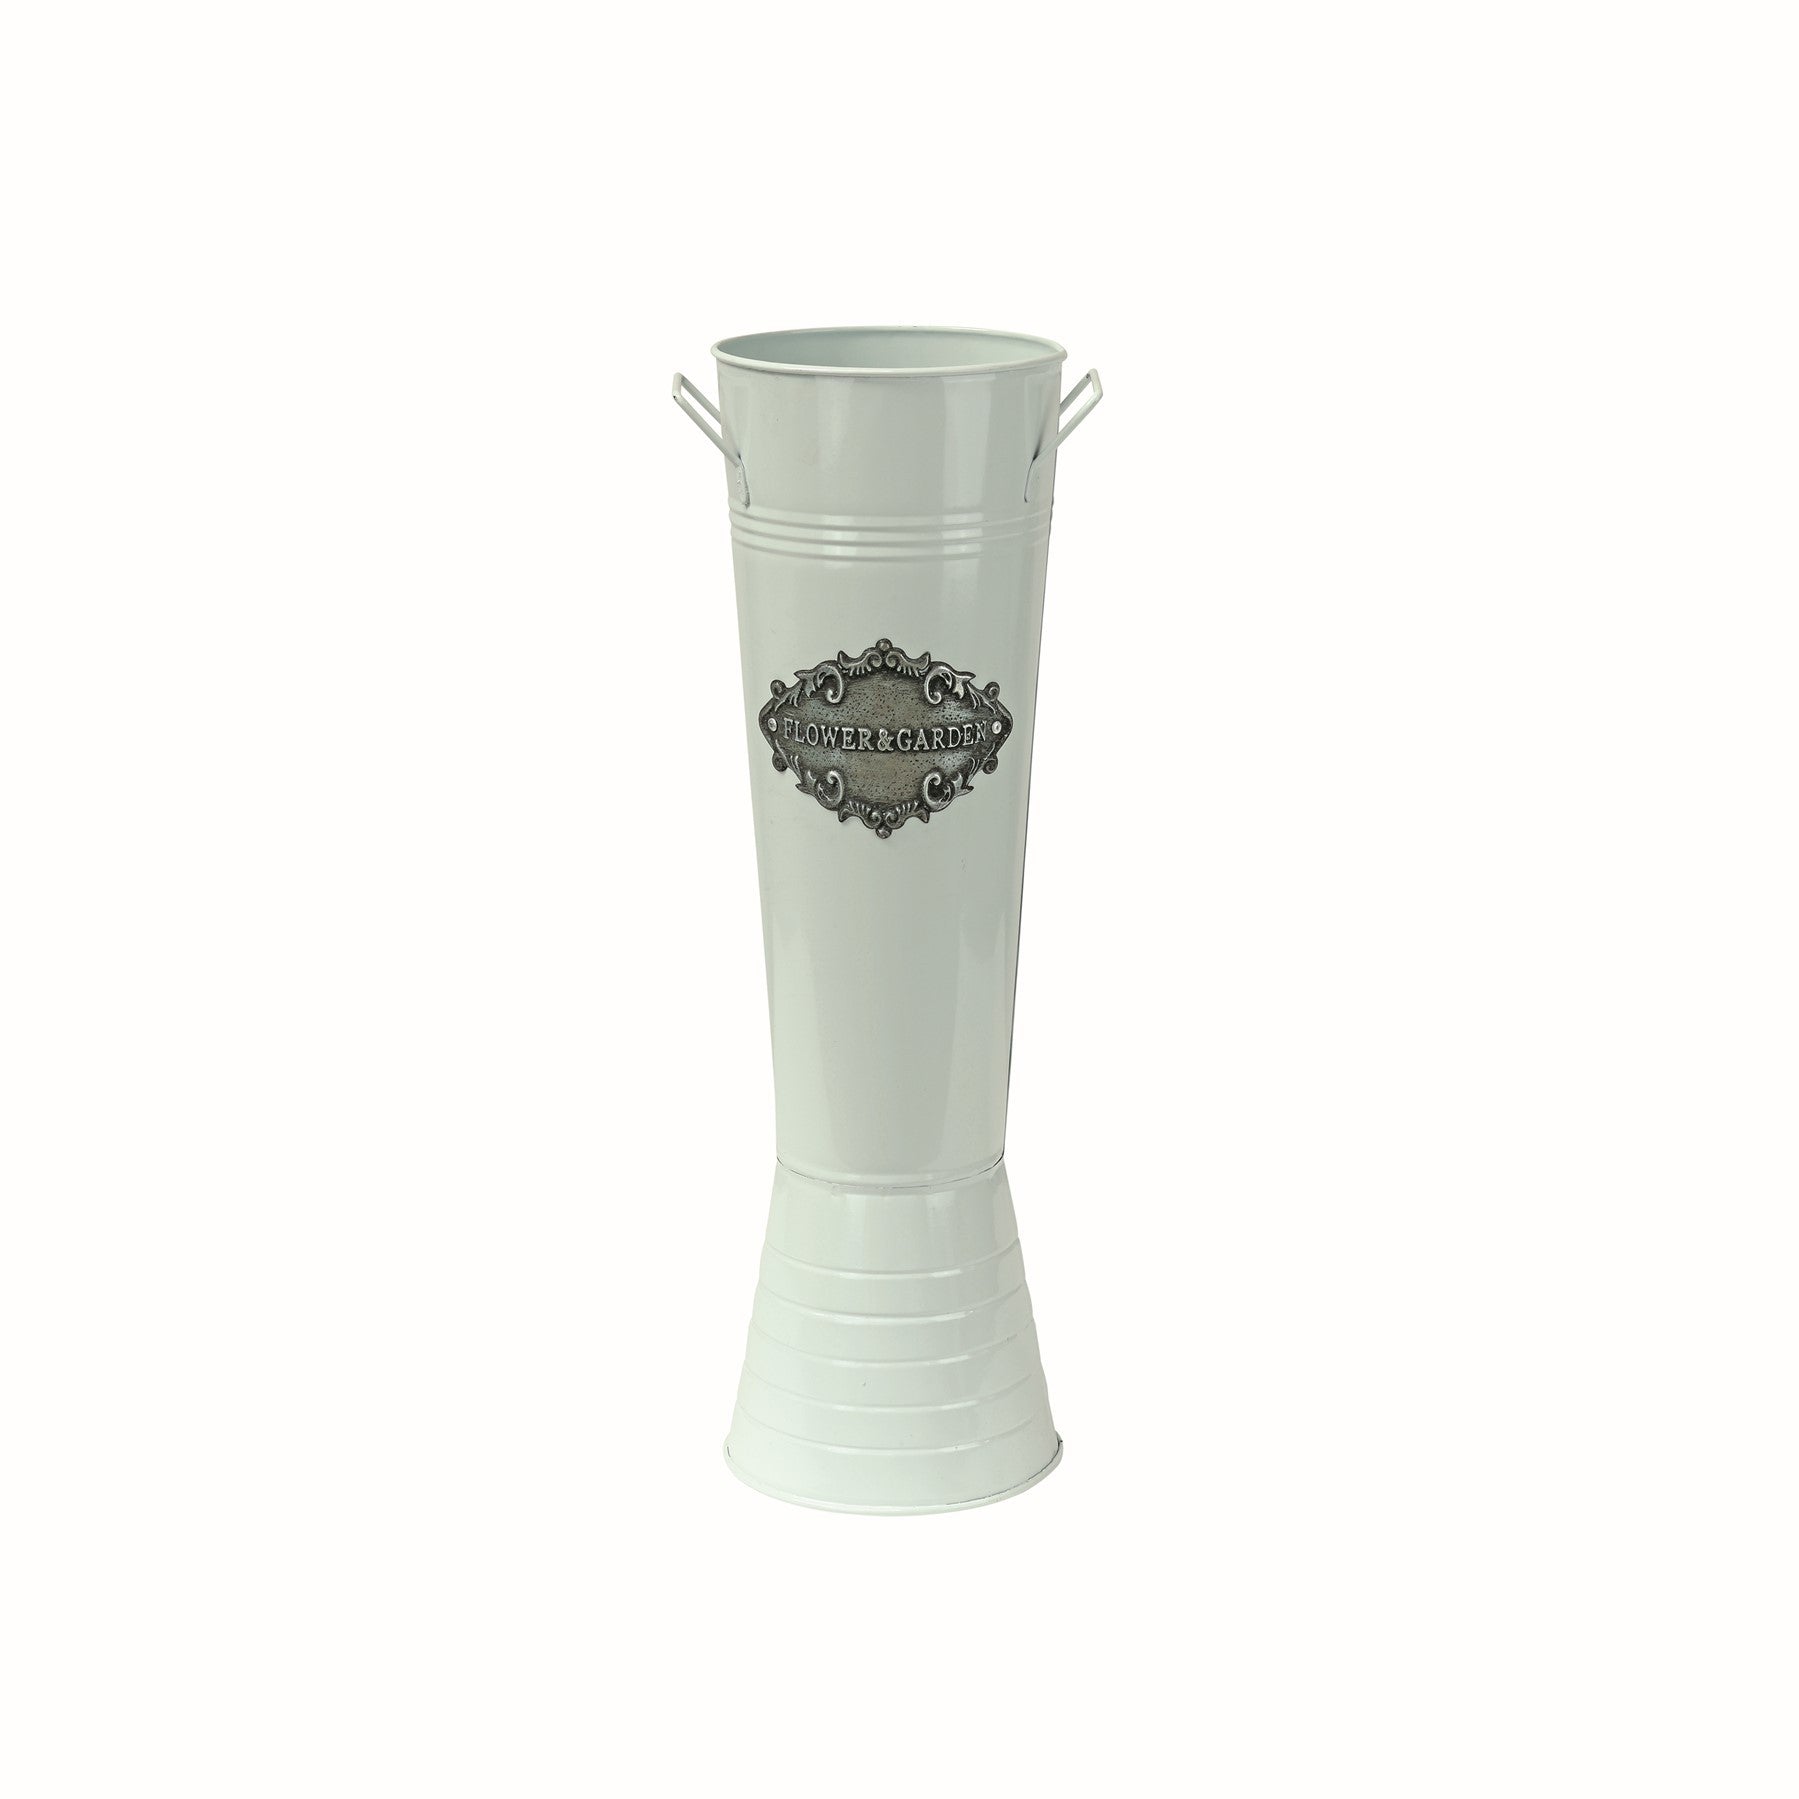 View White Slim Flower Vase 52cm information